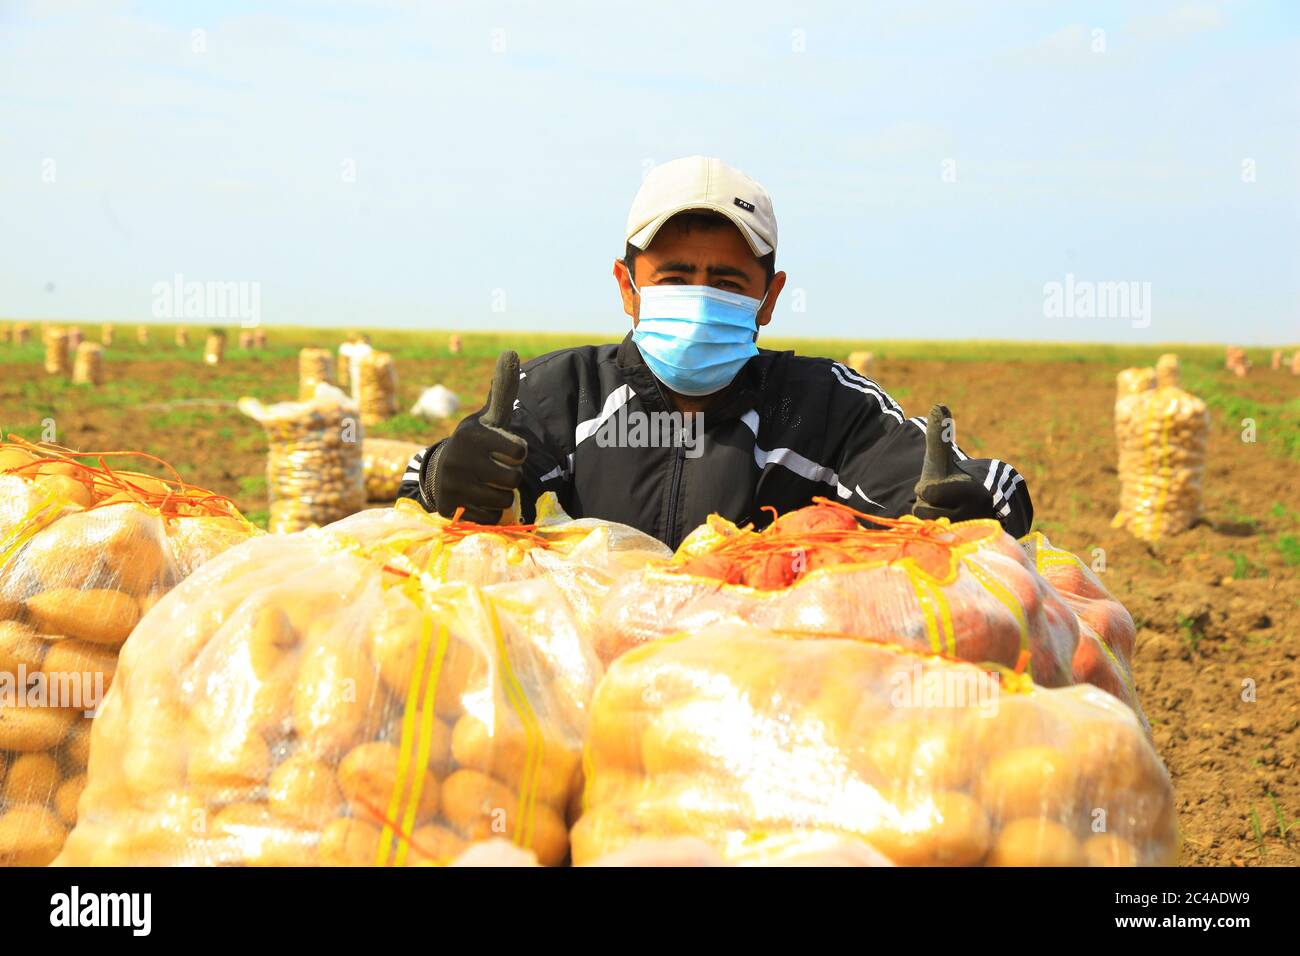 A farmer in hygienic mask carrying potato baskets Stock Photo